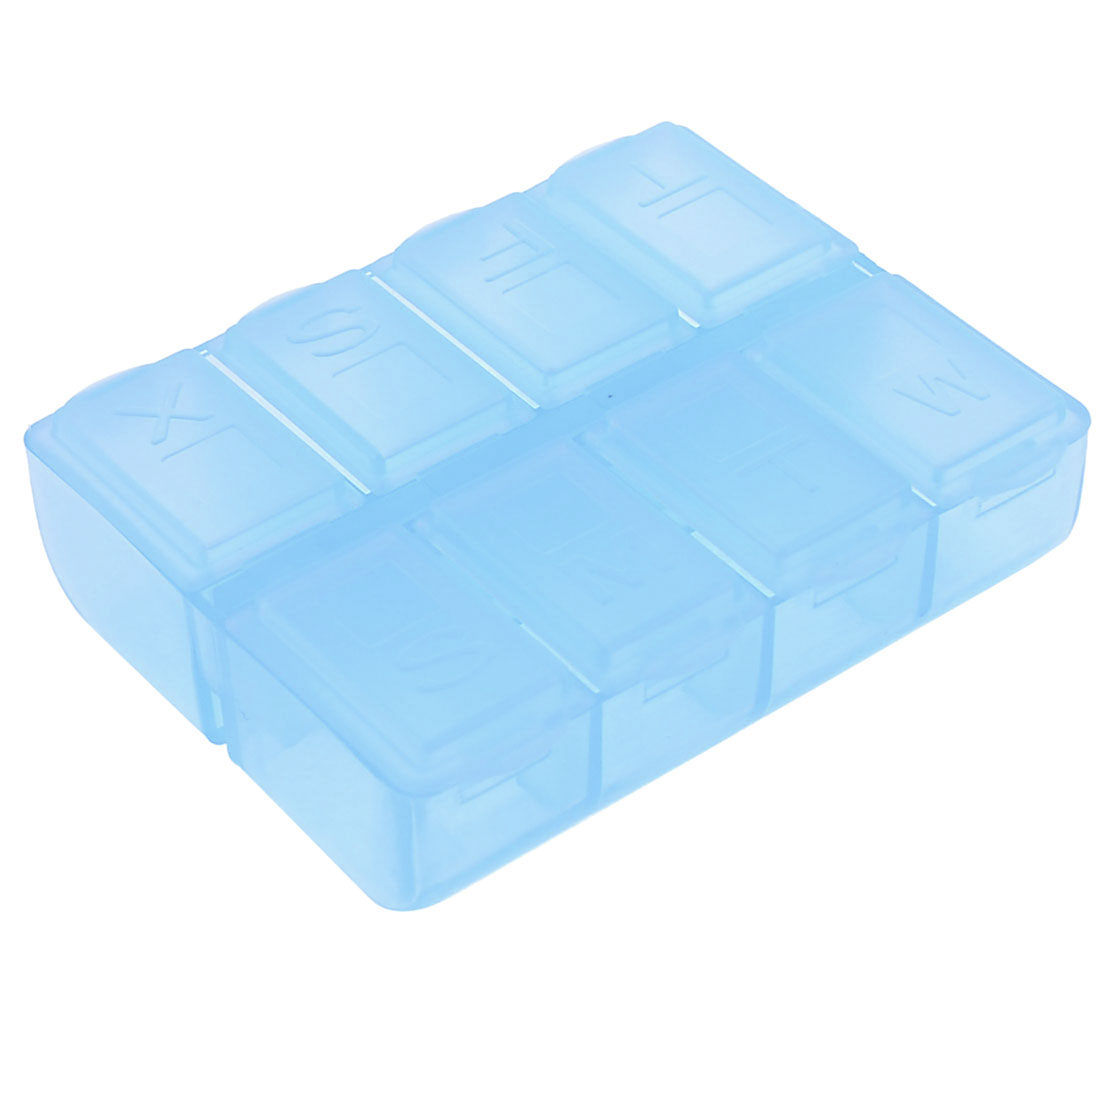 Unique Bargains Blue Plastic 8-Compartment Capsules Pill Case Box 7.3cm x 5.8cm x 2cm